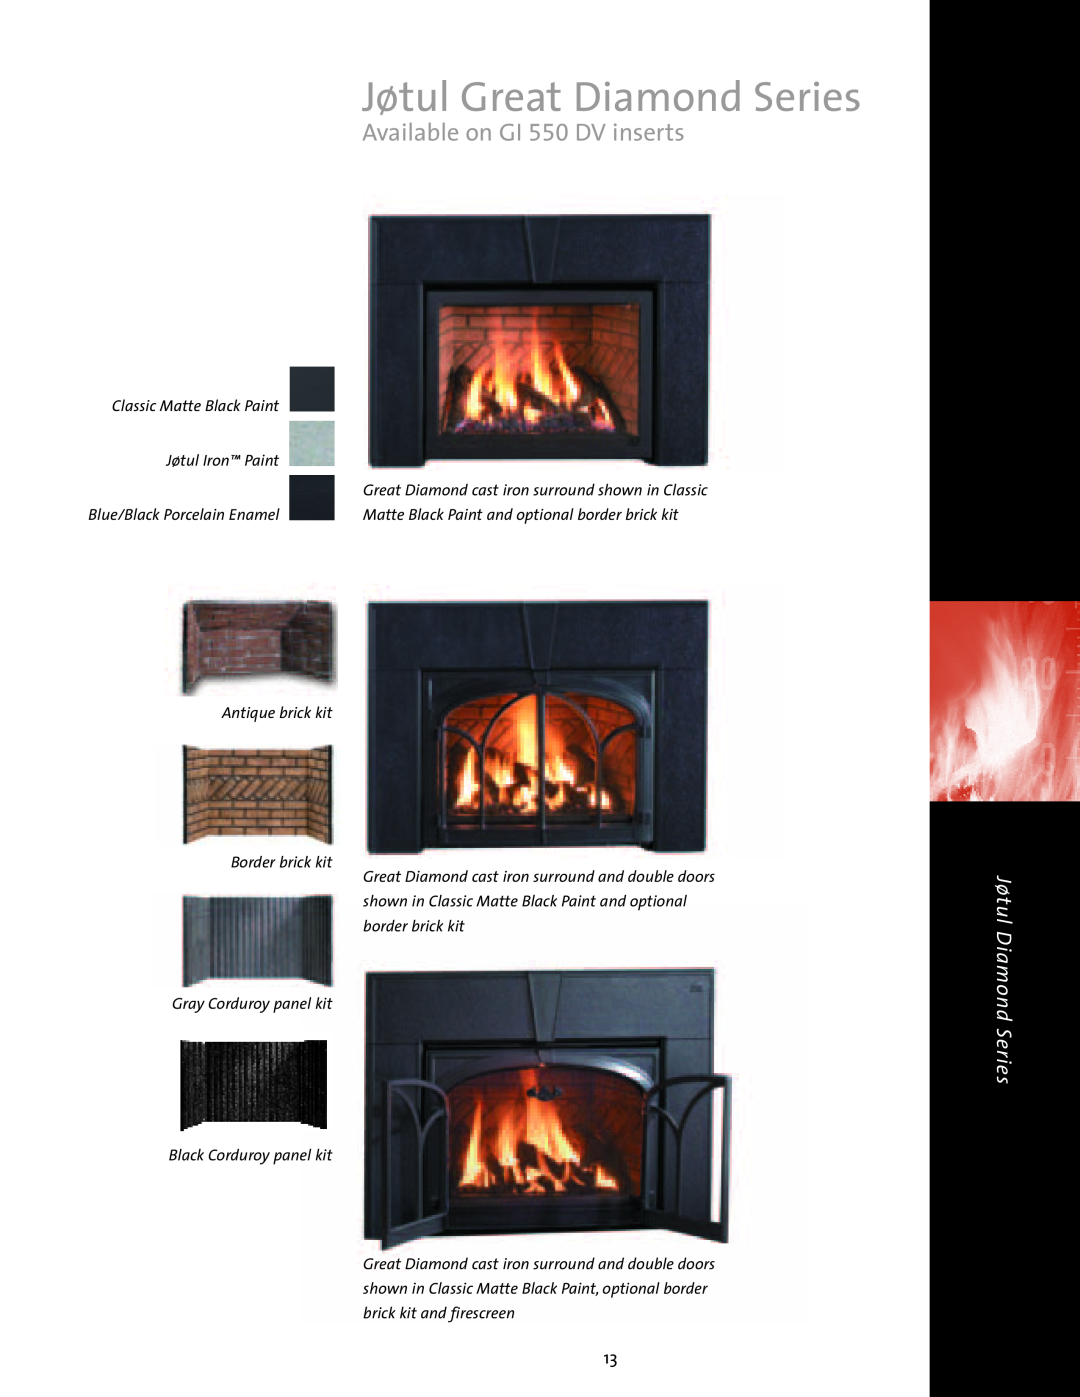 Jotul Gas Inserts and Fireplaces brochure Jøtul Great Diamond Series, Available on GI 550 DV inserts, Jøtul Diamond Series 